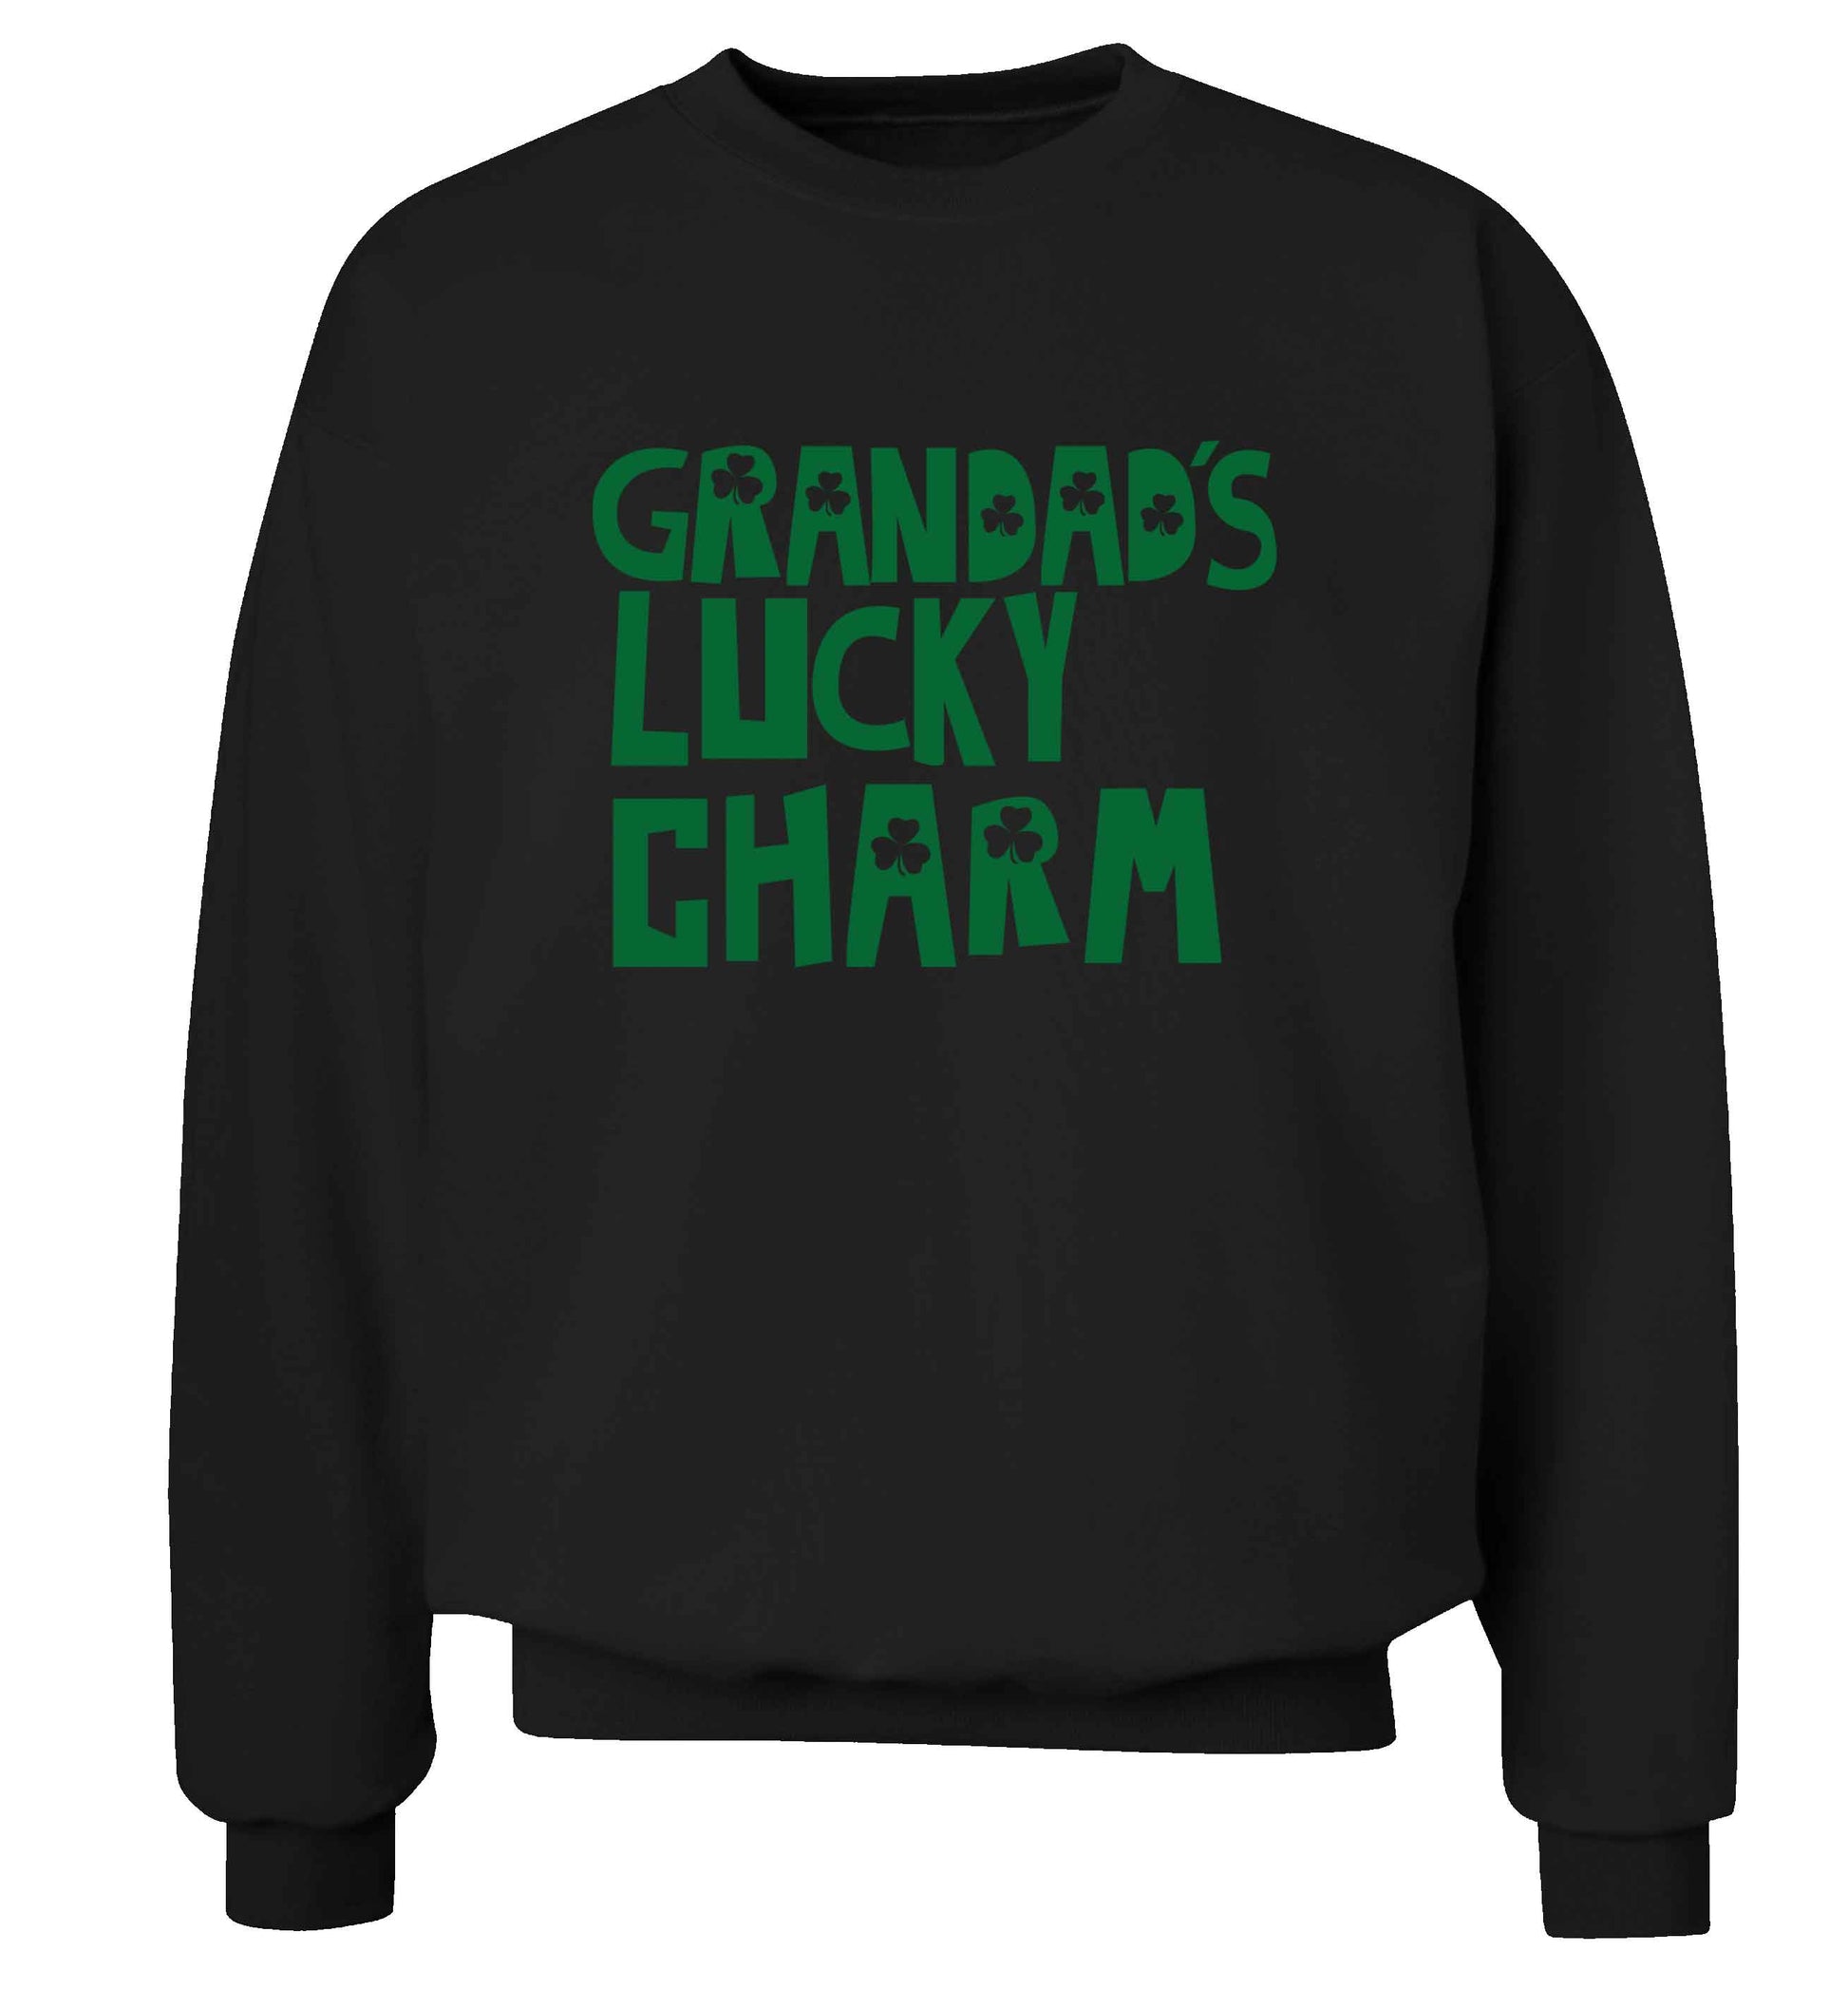 Grandad's lucky charm  adult's unisex black sweater 2XL